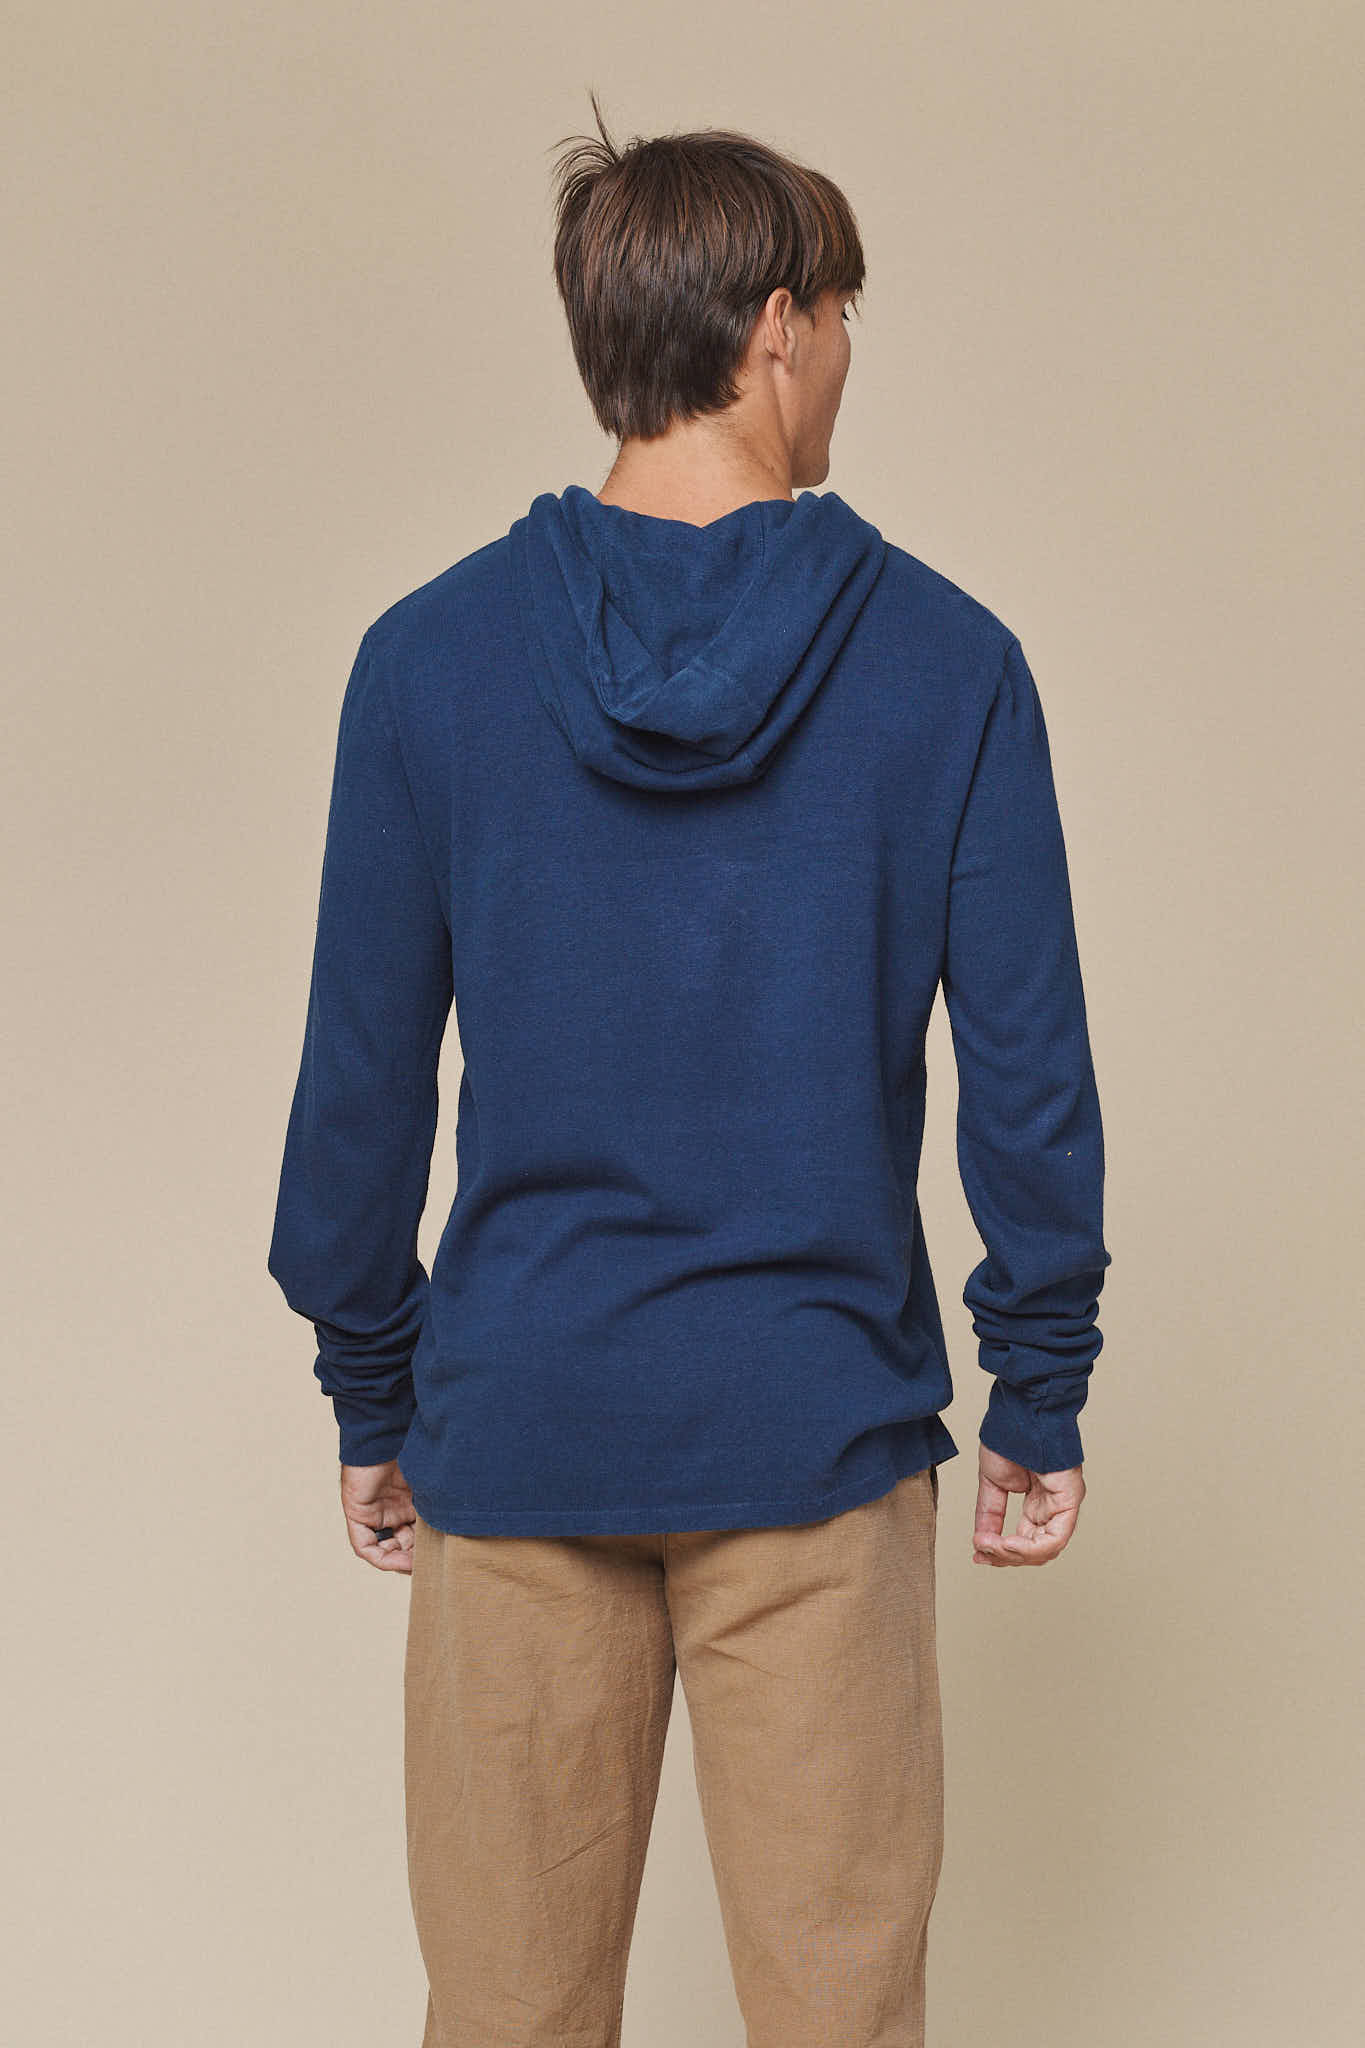 Santa Cruz Hooded Long Sleeve | Jungmaven Hemp Clothing & Accessories / Color: